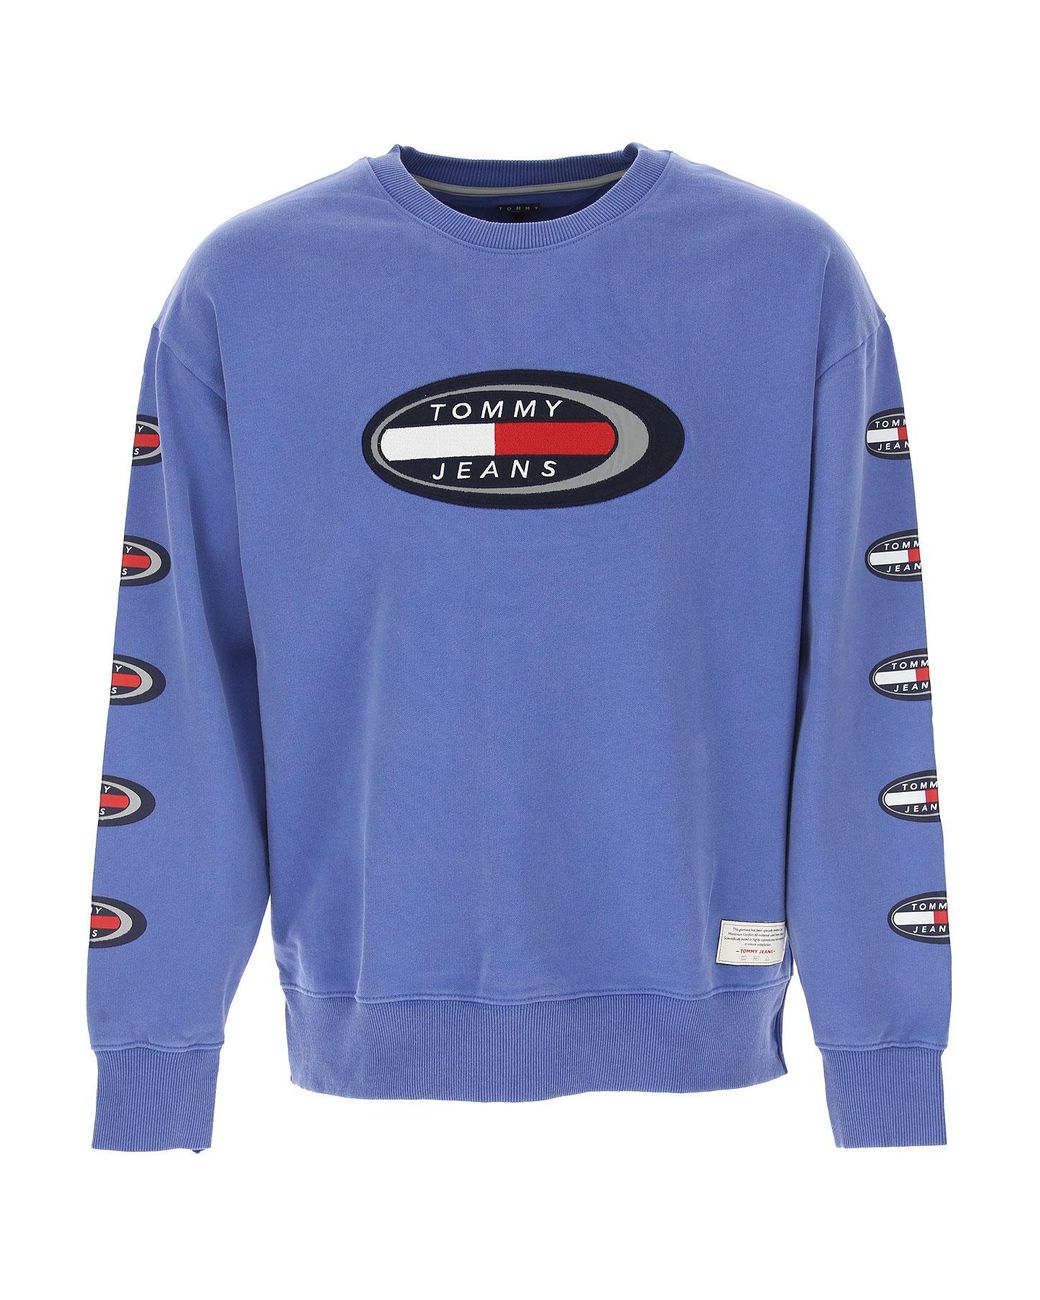 Tommy Hilfiger Cotton Sweatshirt For Men On Sale in Ultramarine Blue ...